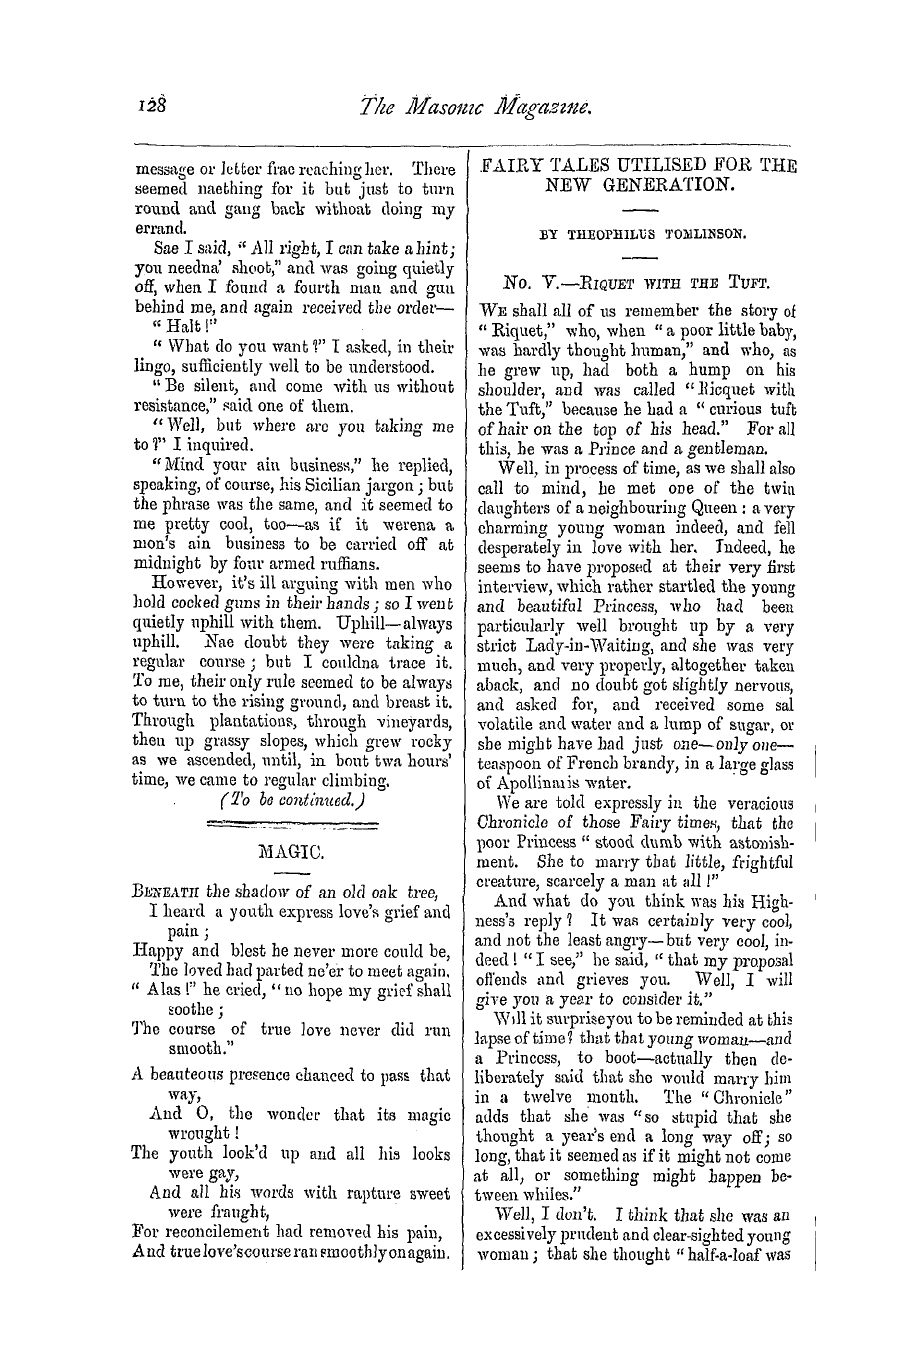 The Masonic Magazine: 1876-09-01 - Magic.